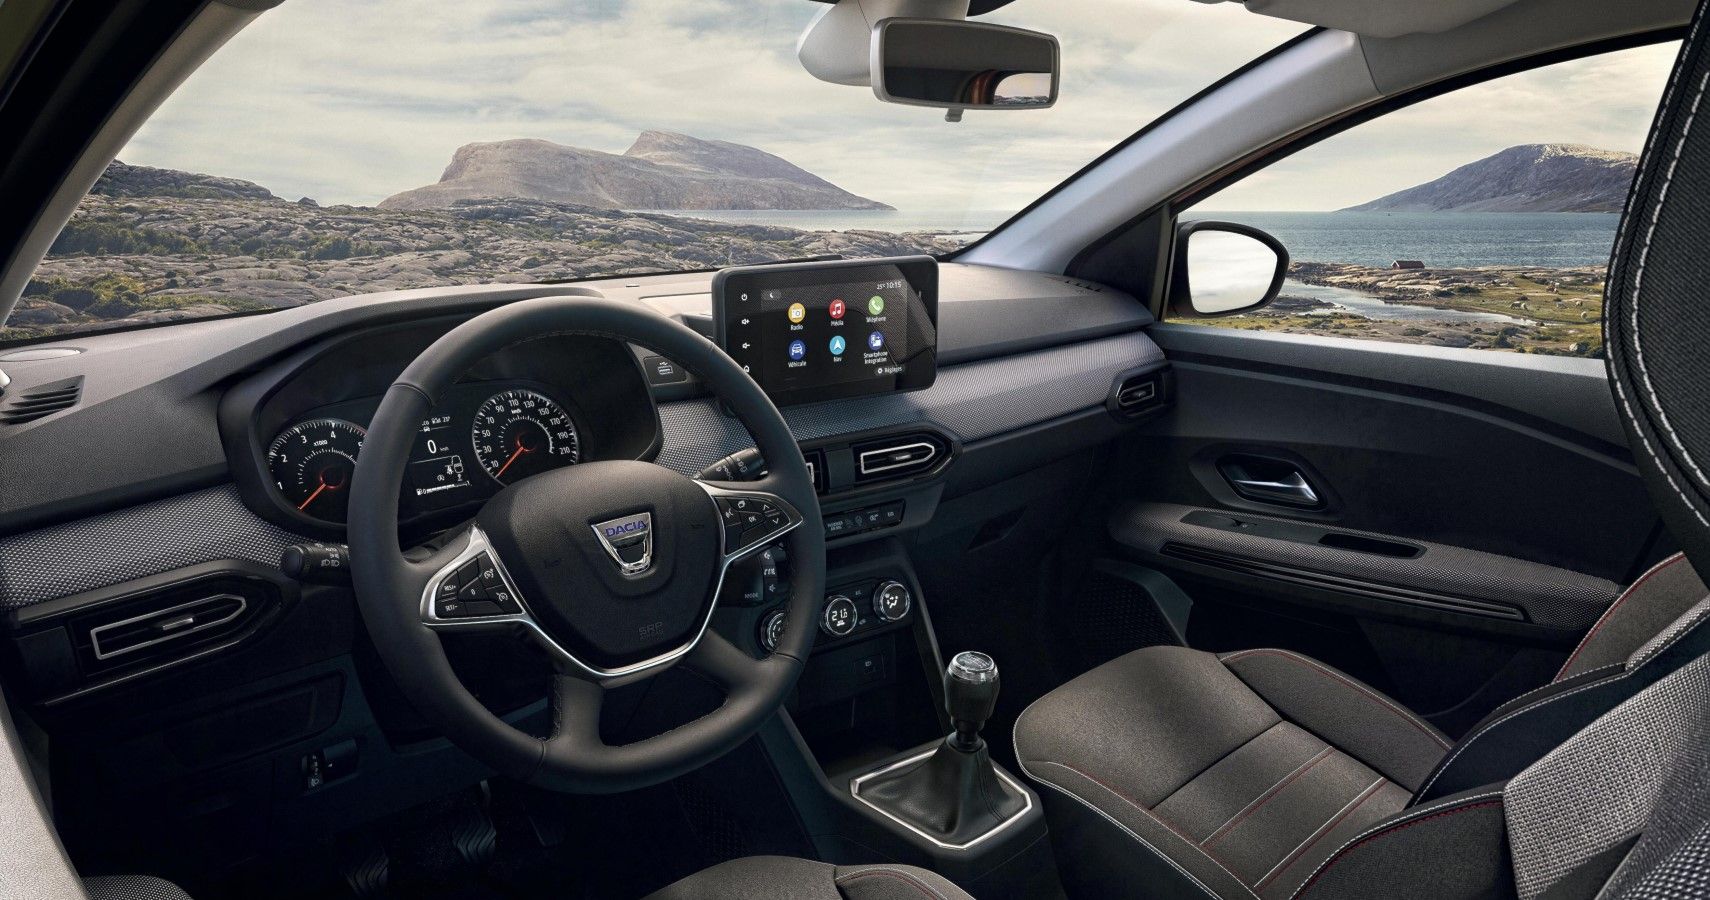 Dacia Jogger inteiror dashboard layout view